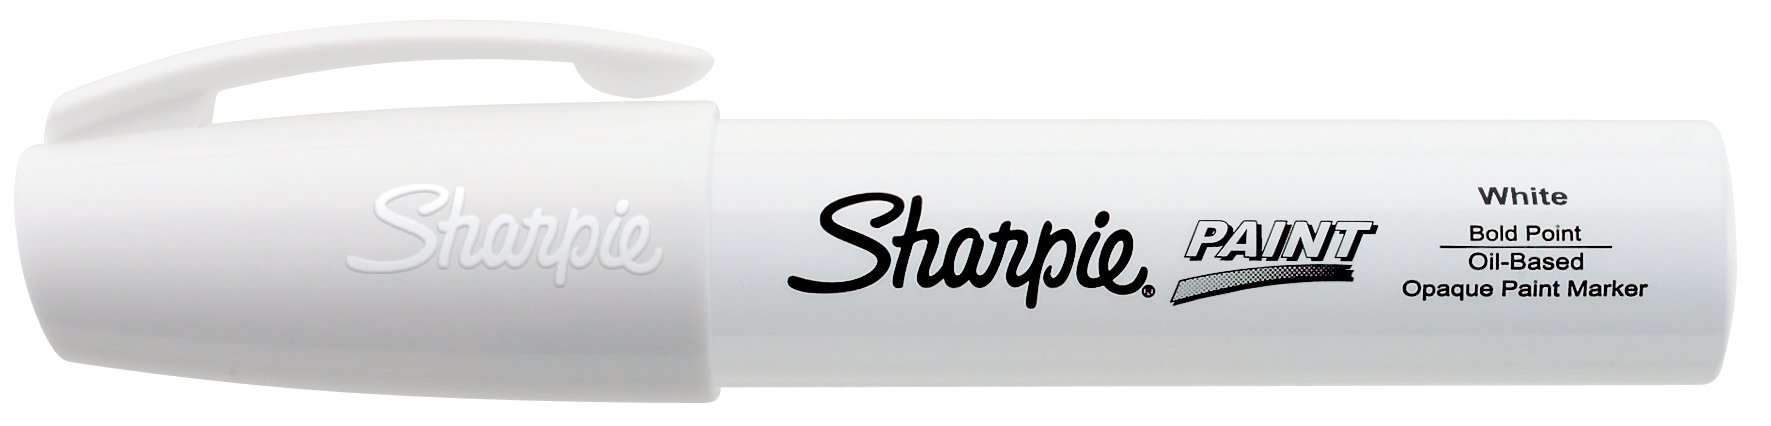 Sharpie Oil-Based Paint Marker - Medium - White - Sam Flax Atlanta